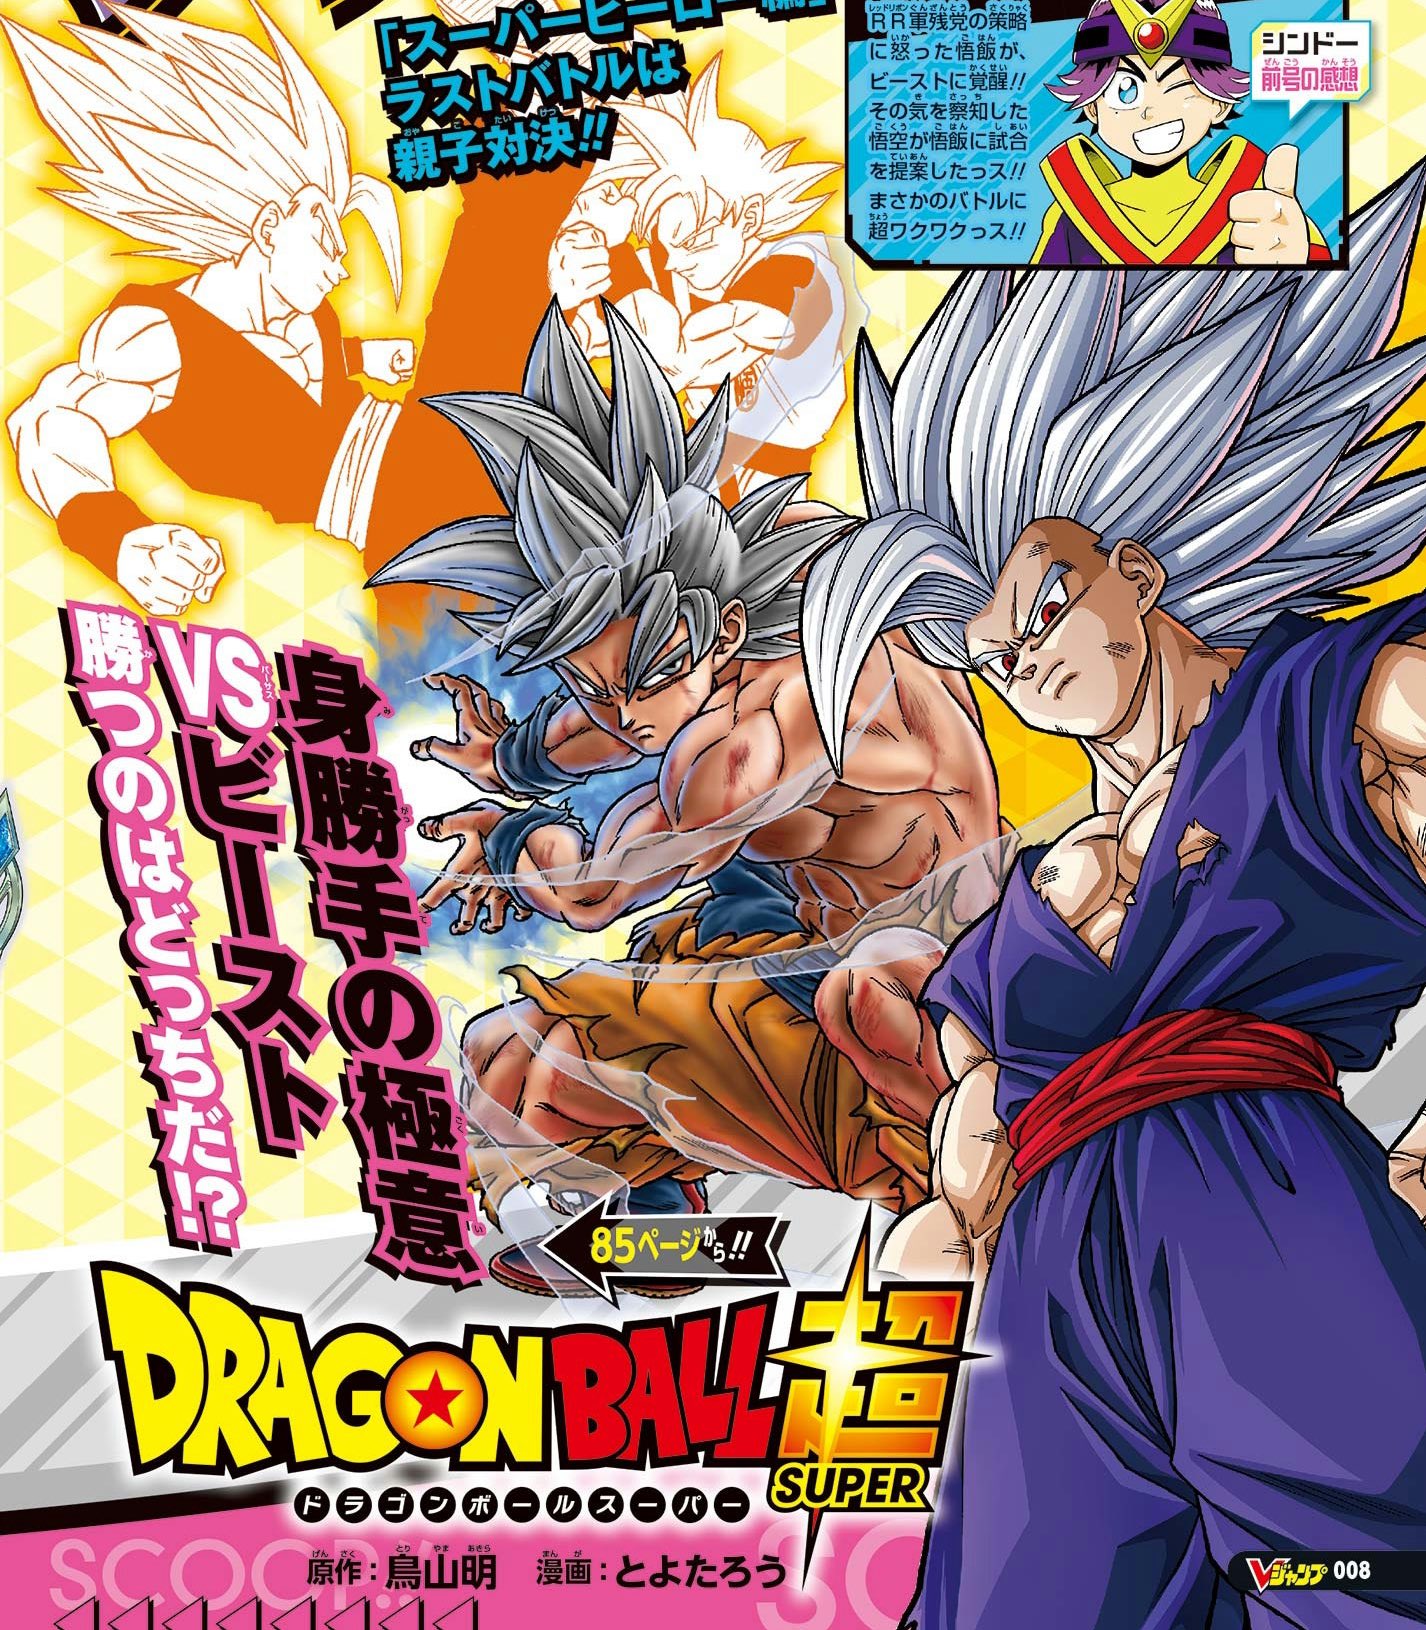 Dragon Ball Super Manga To Go On Indefinite Hiatus Starting From April 2024